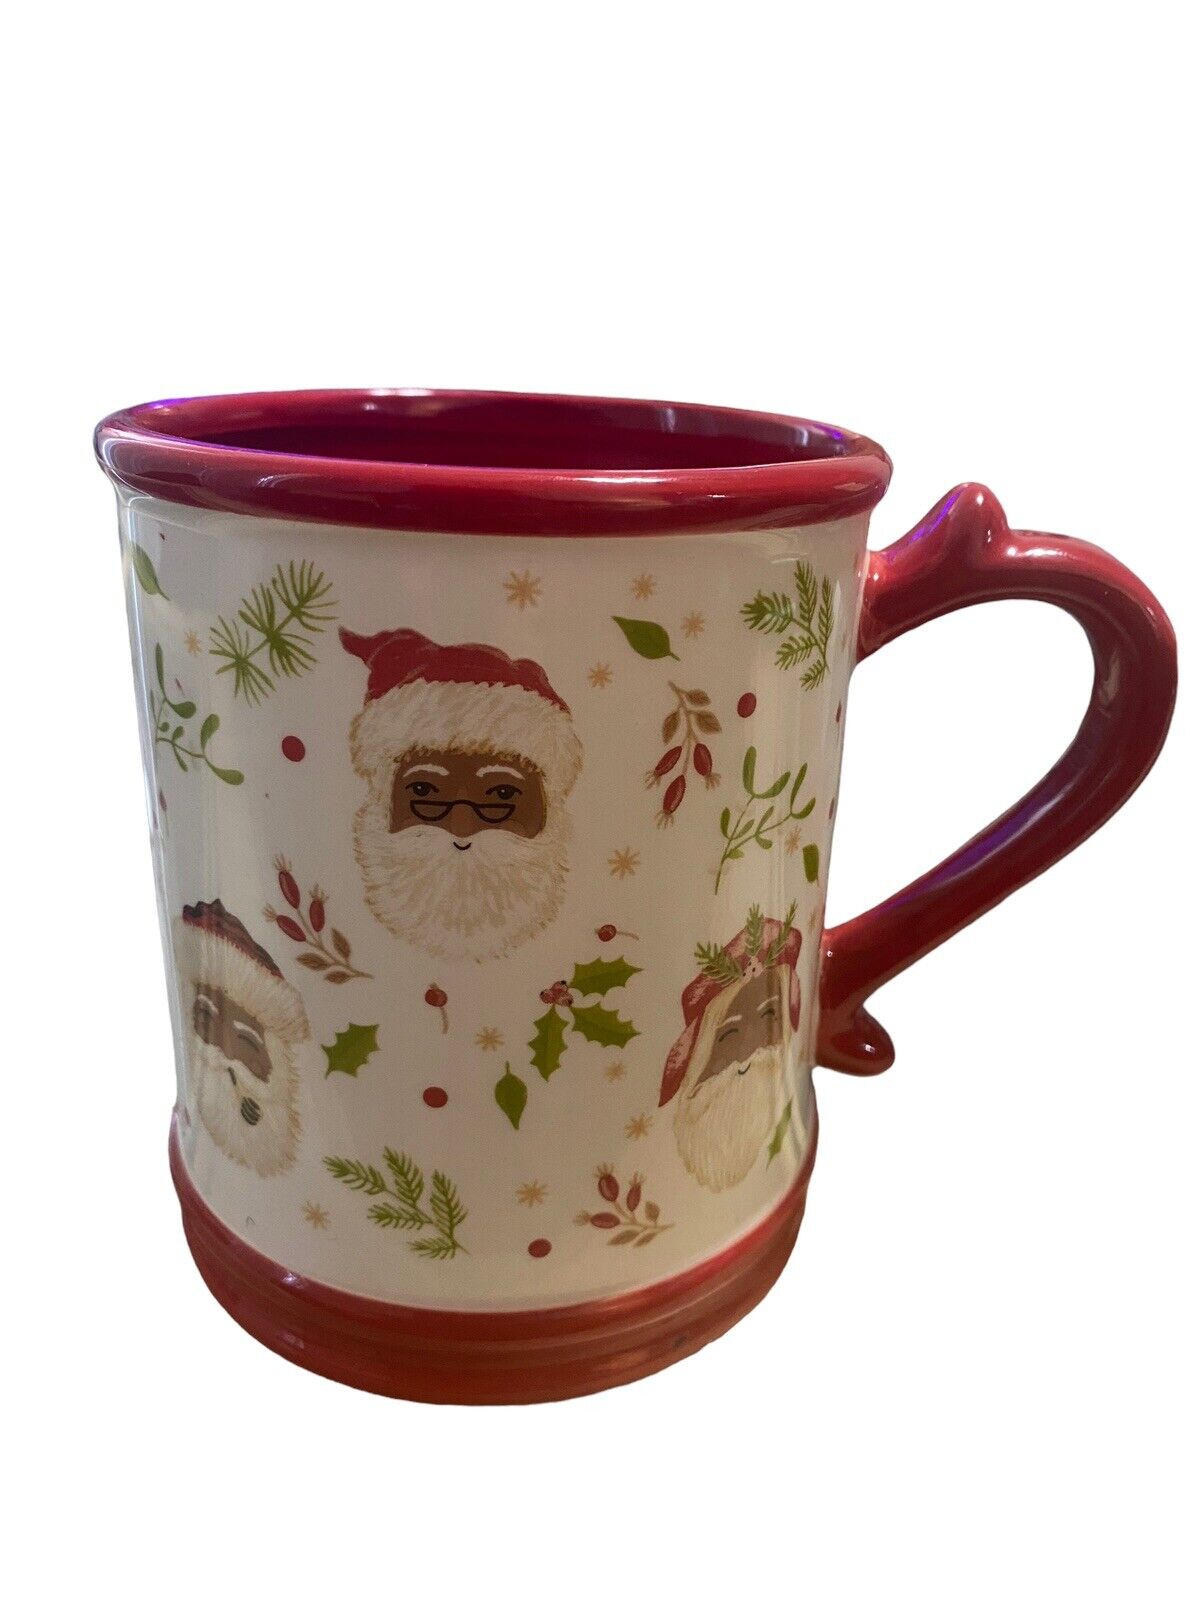 Tag Brand Christmas 24 Oz Coffee Tea Cup Mug. All The Santa’s Faces